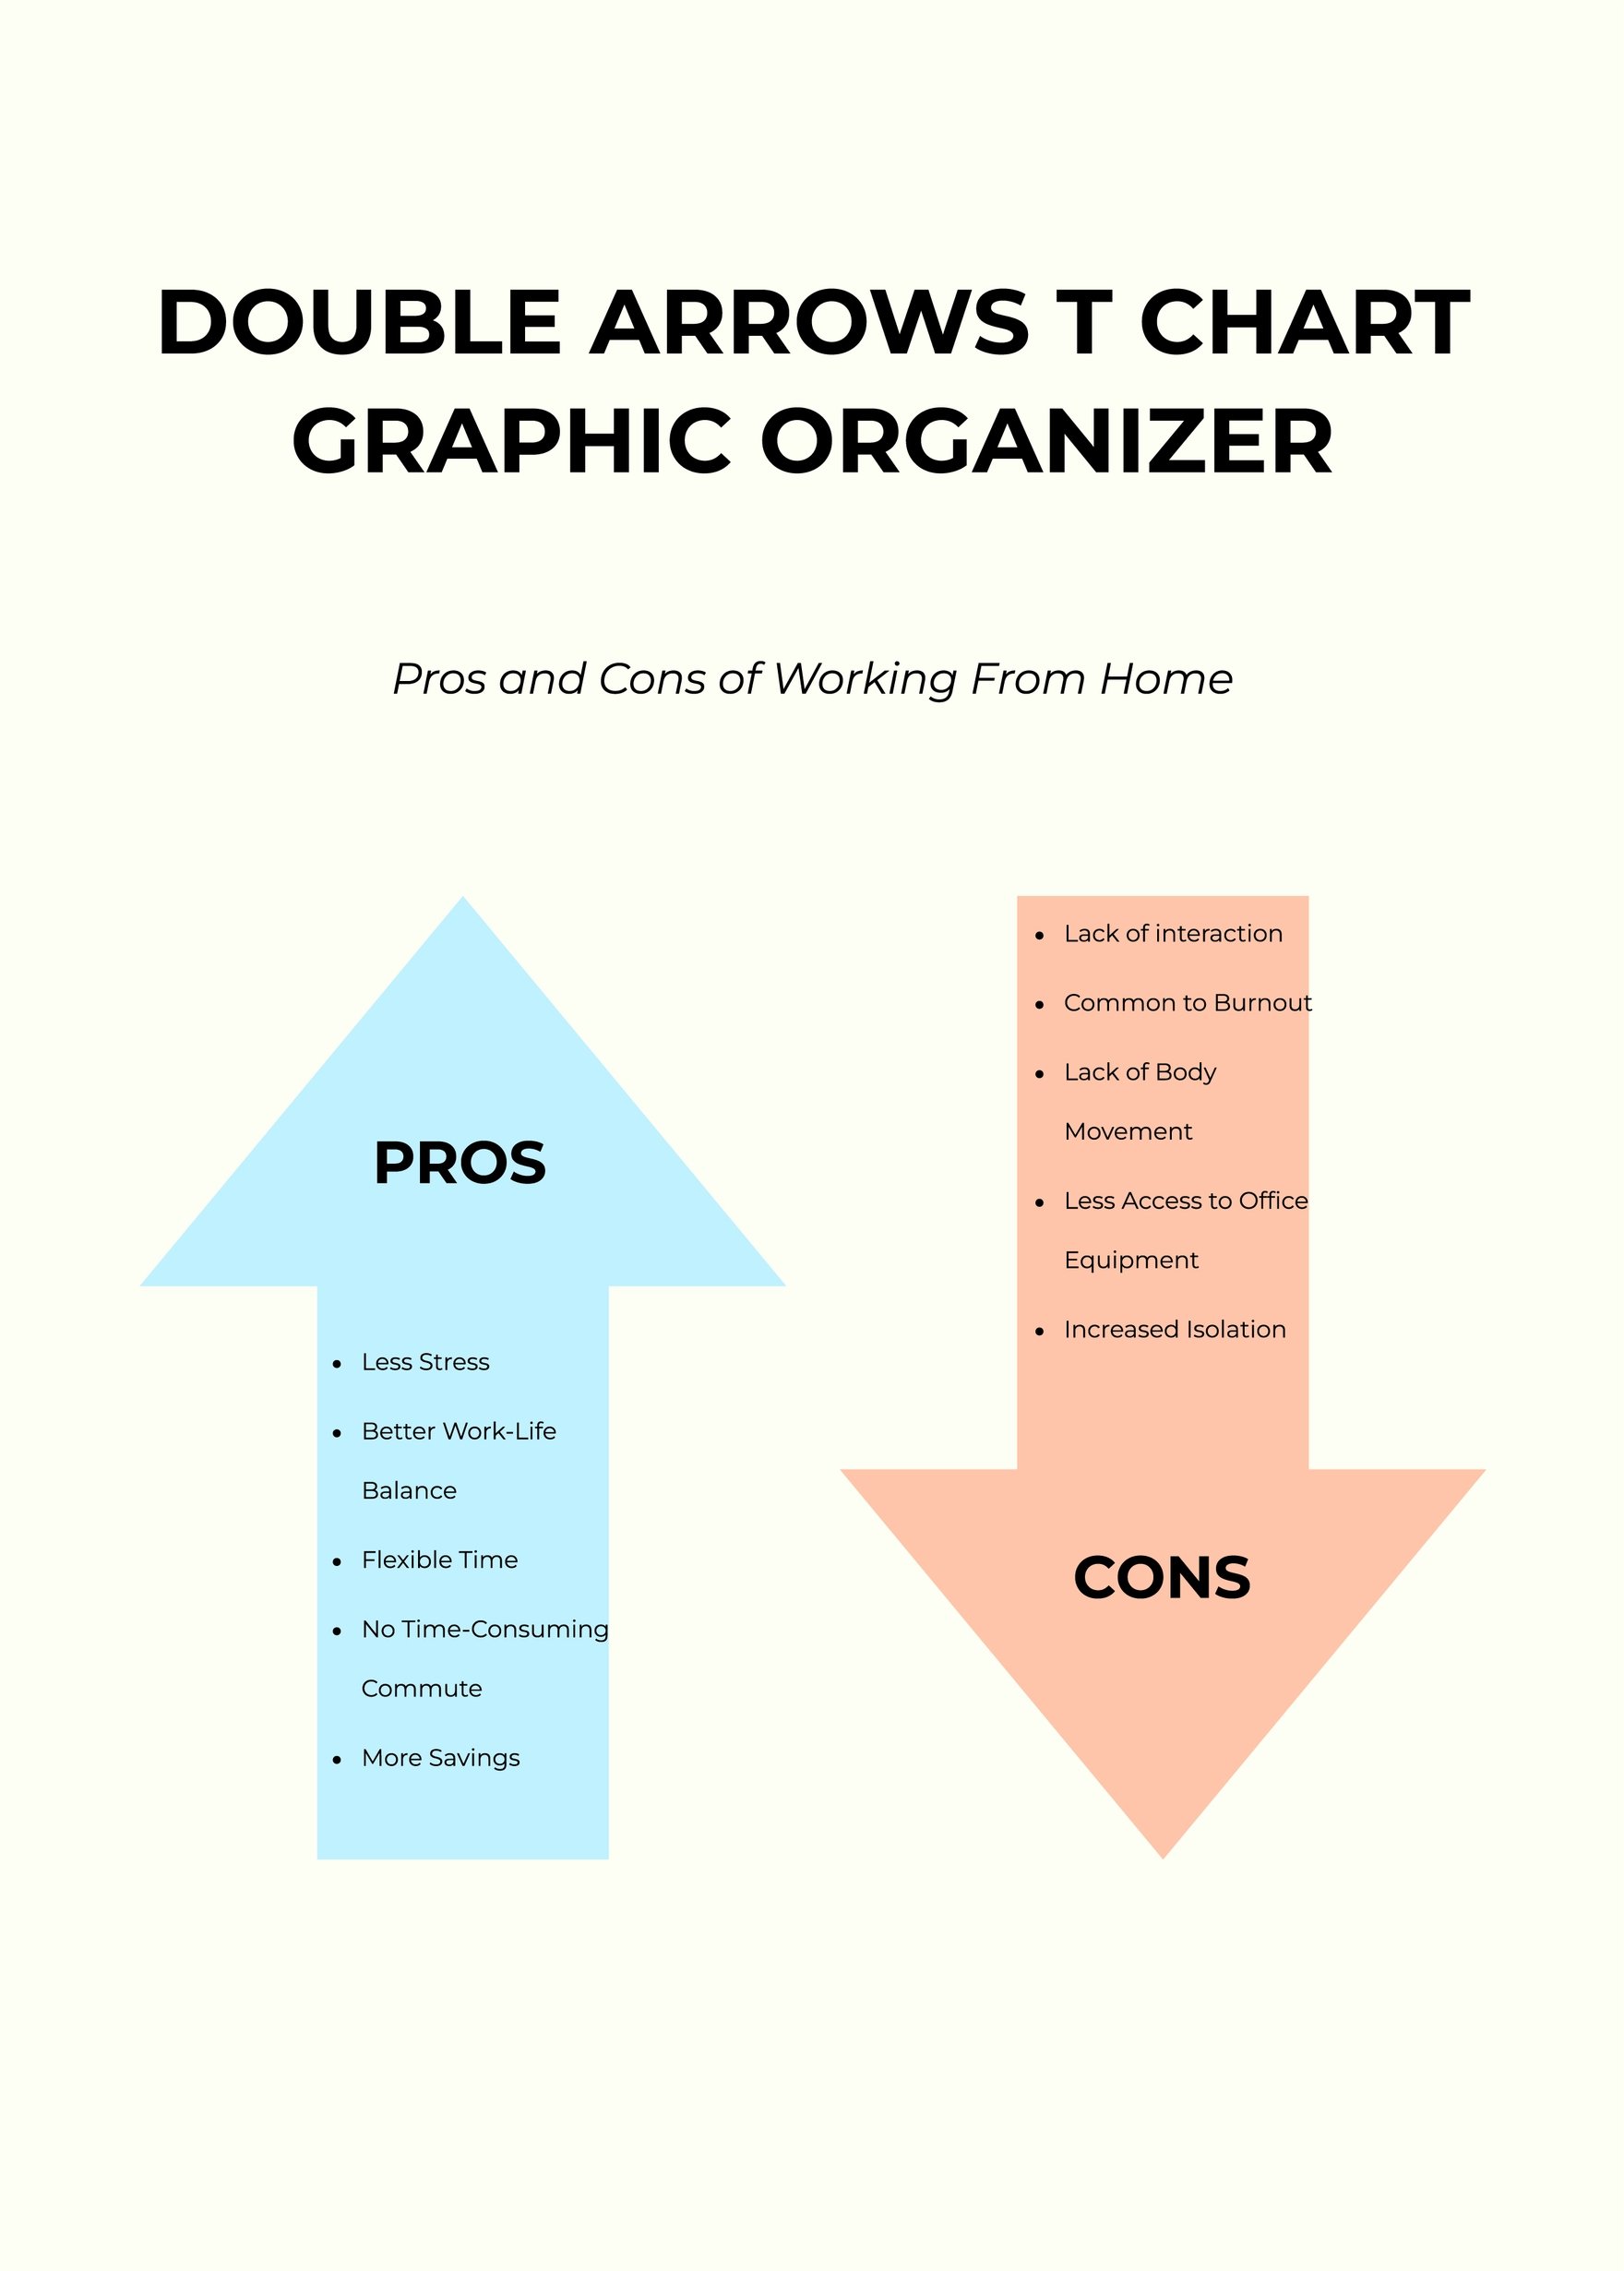 Double Arrows T Chart Graphic Organizer in PDF, Illustrator